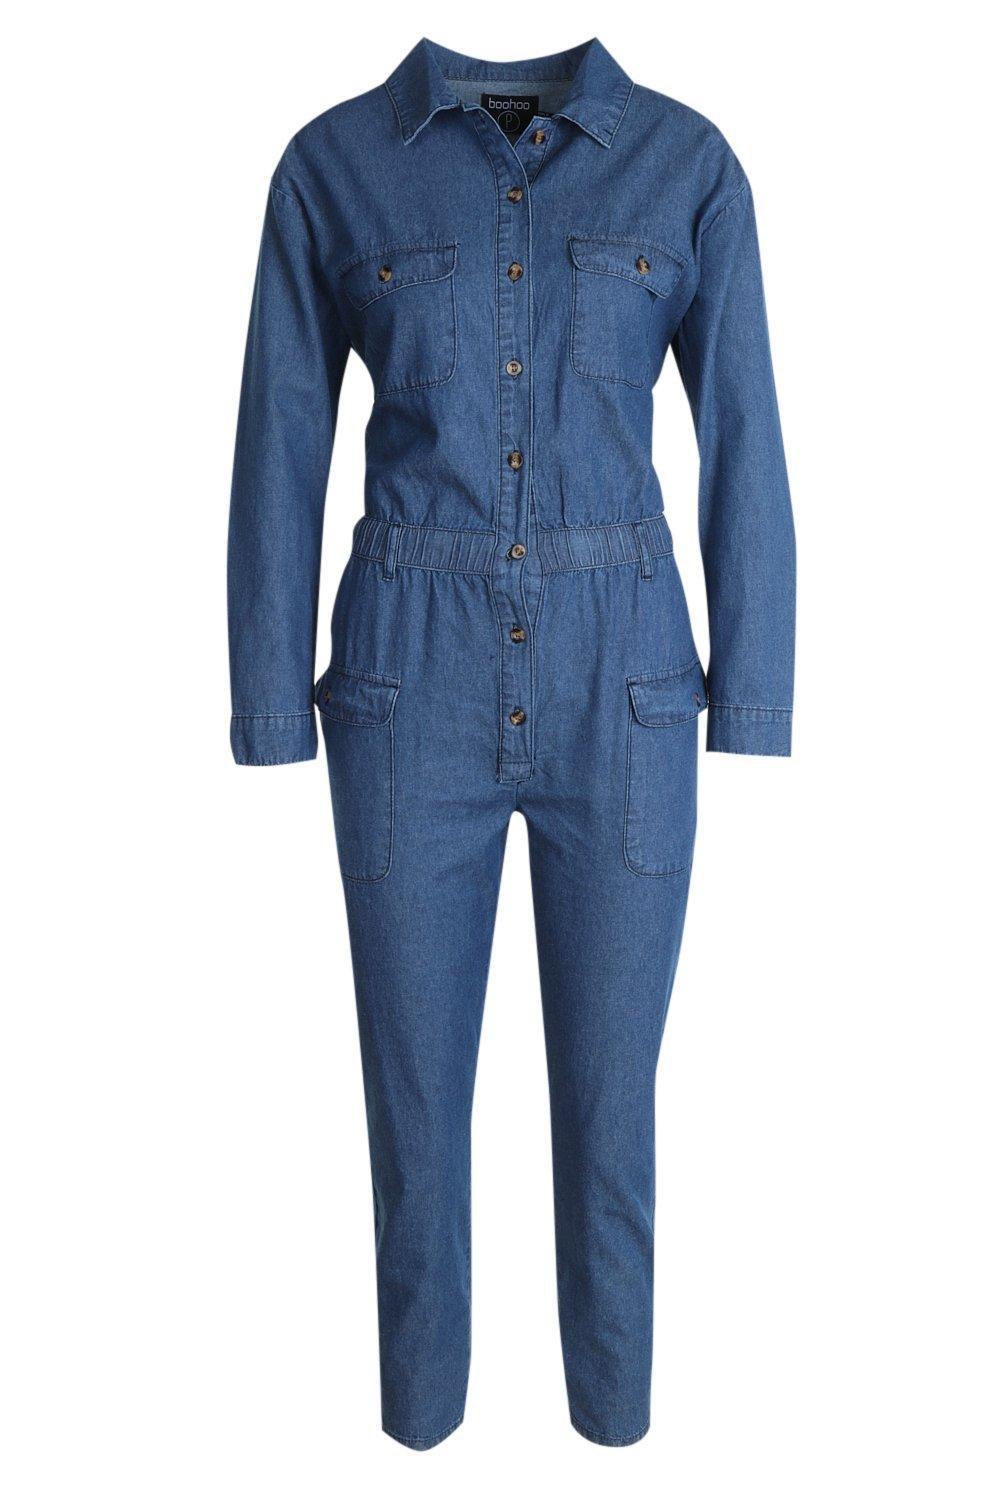 Boohoo Petite Denim Boiler Suit in Blue - Lyst